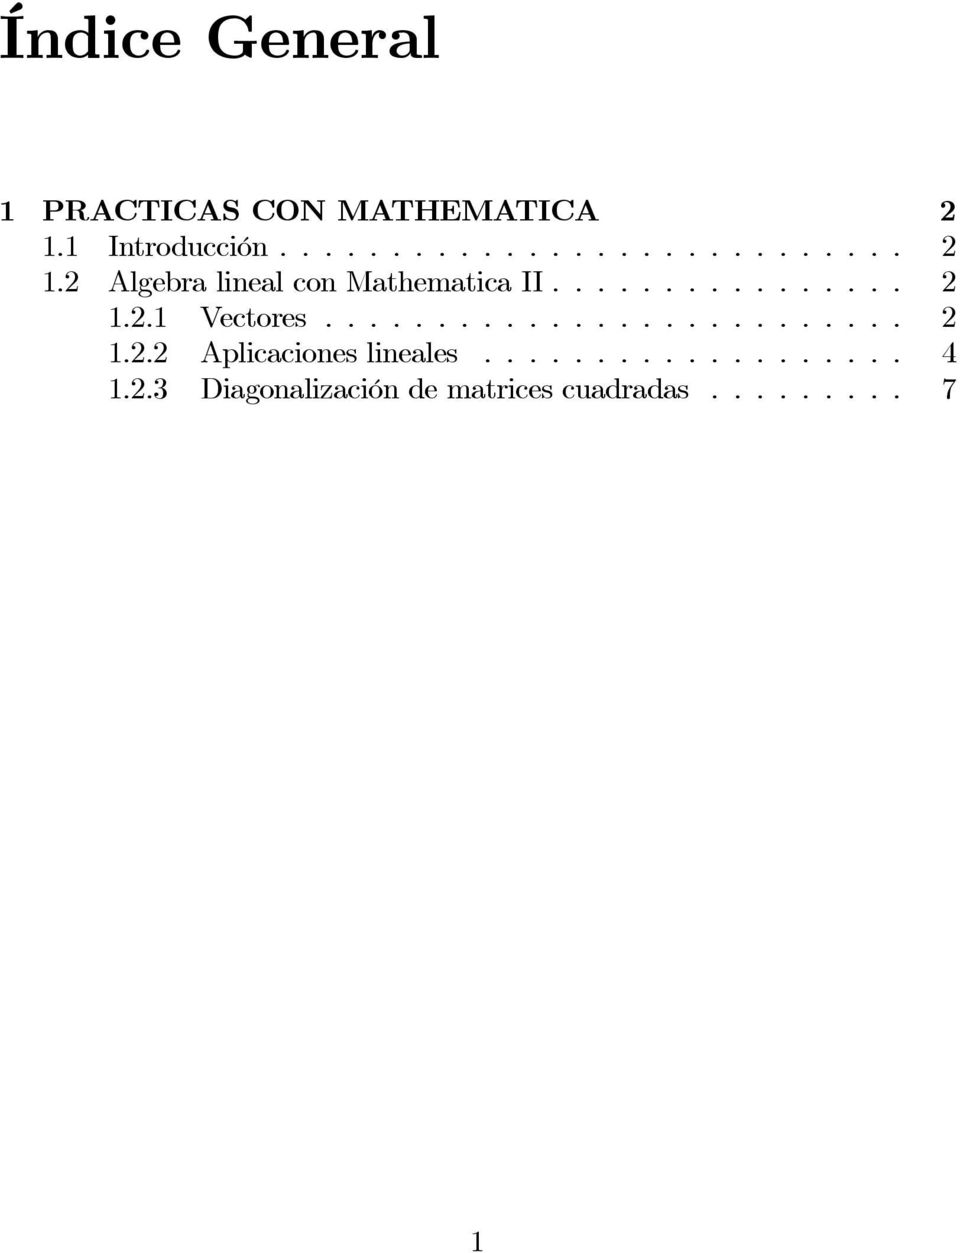 2 AlgebralinealconMathematicaII... 2 1.2.1 Vectores.